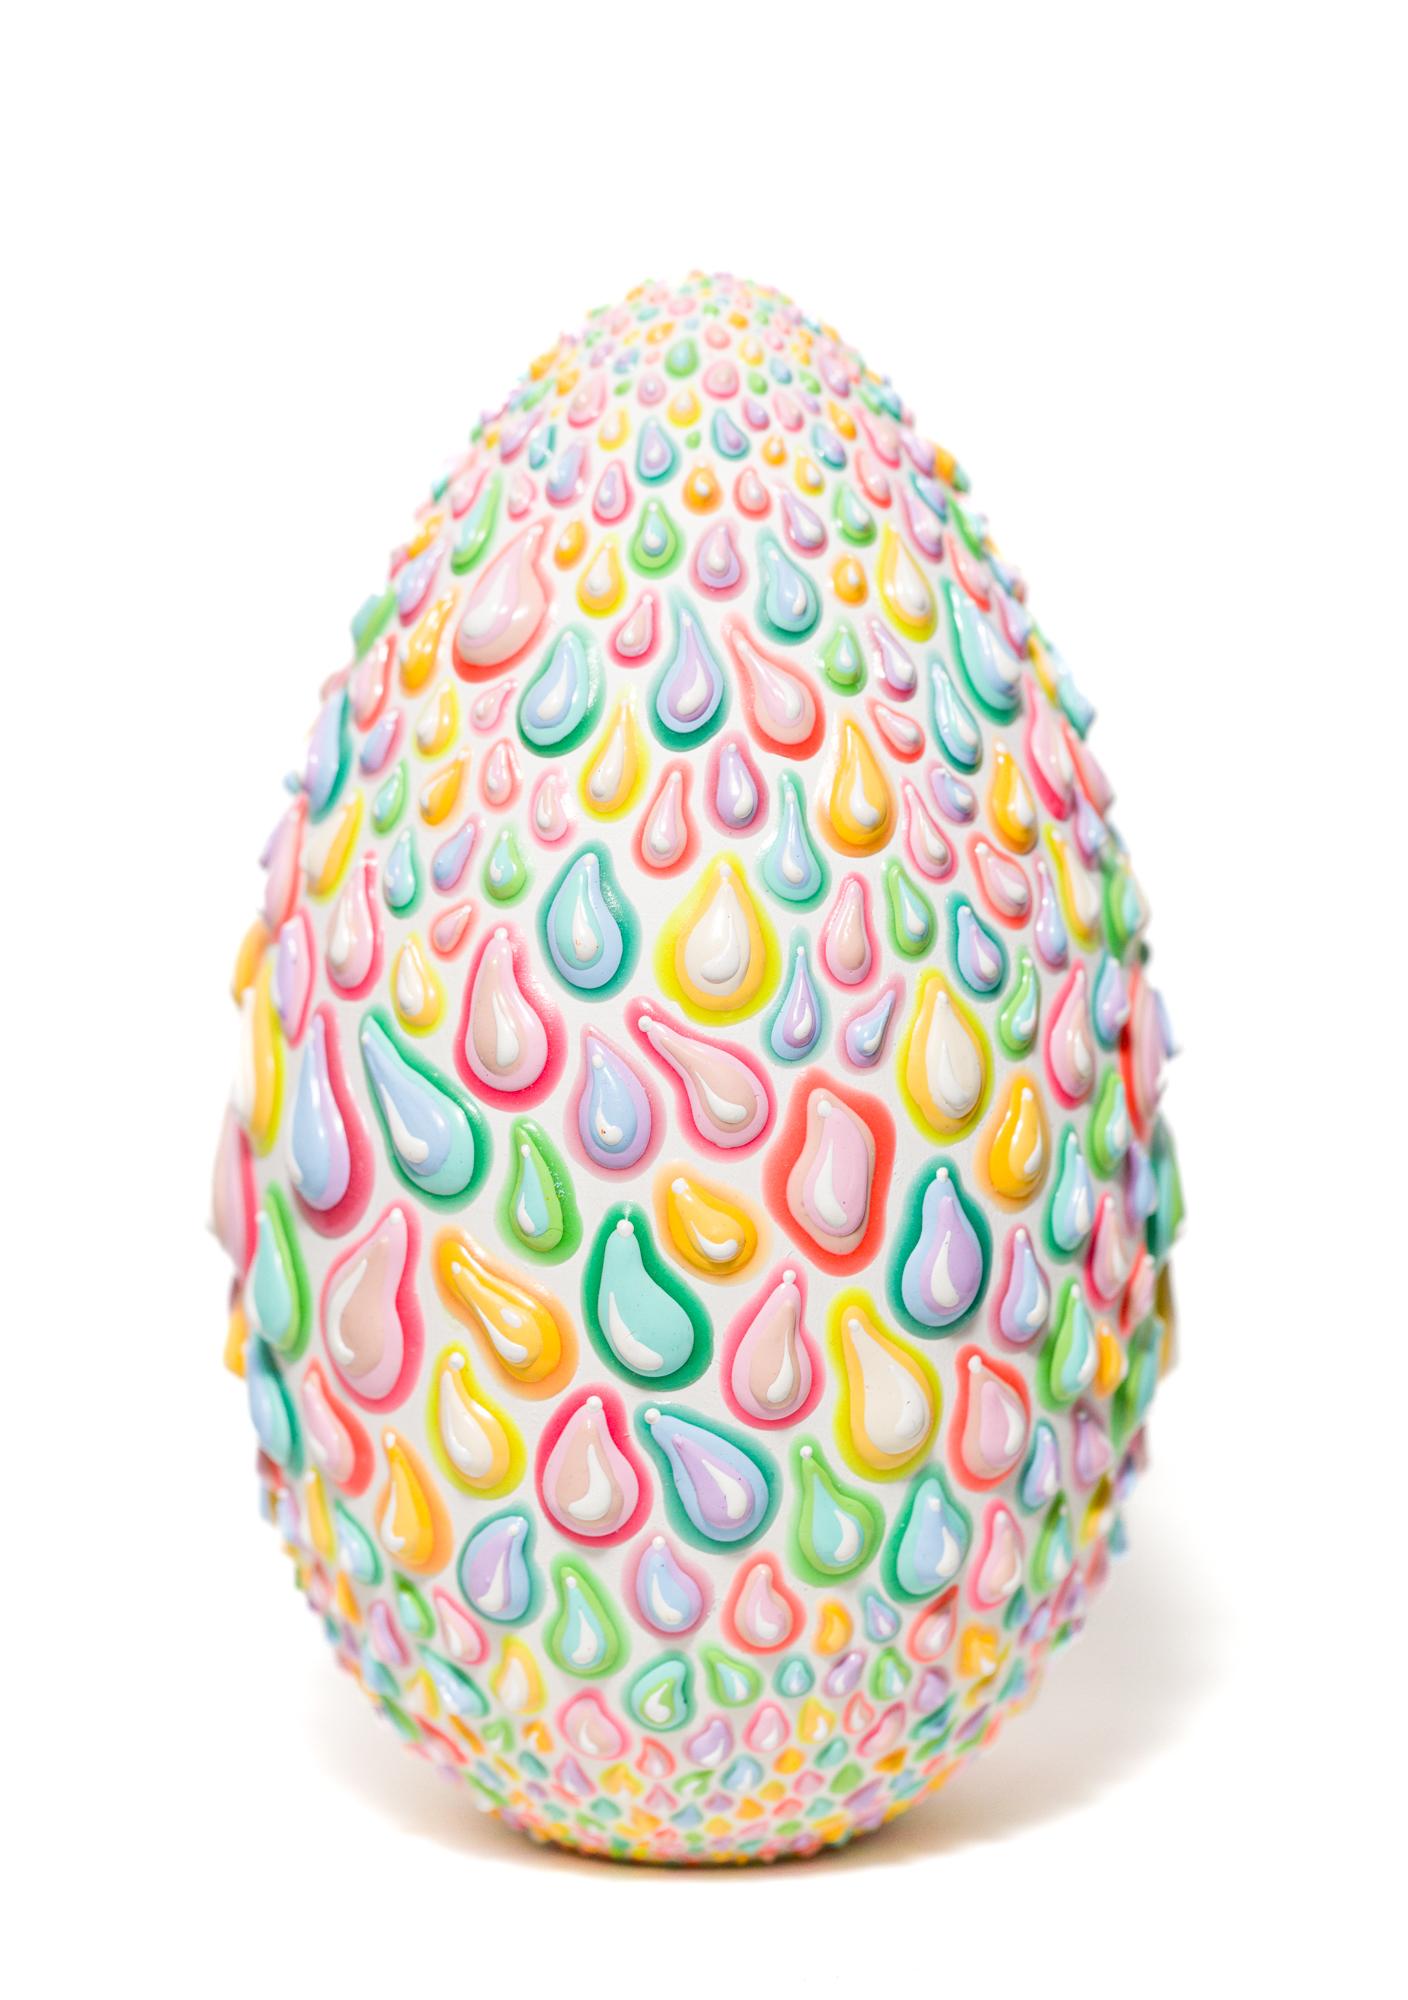 PJ Linden Abstract Sculpture - "Cereal Milk Egg", Egg Motif, Pattern, Texture, Pastel Colors Dimensional Paint